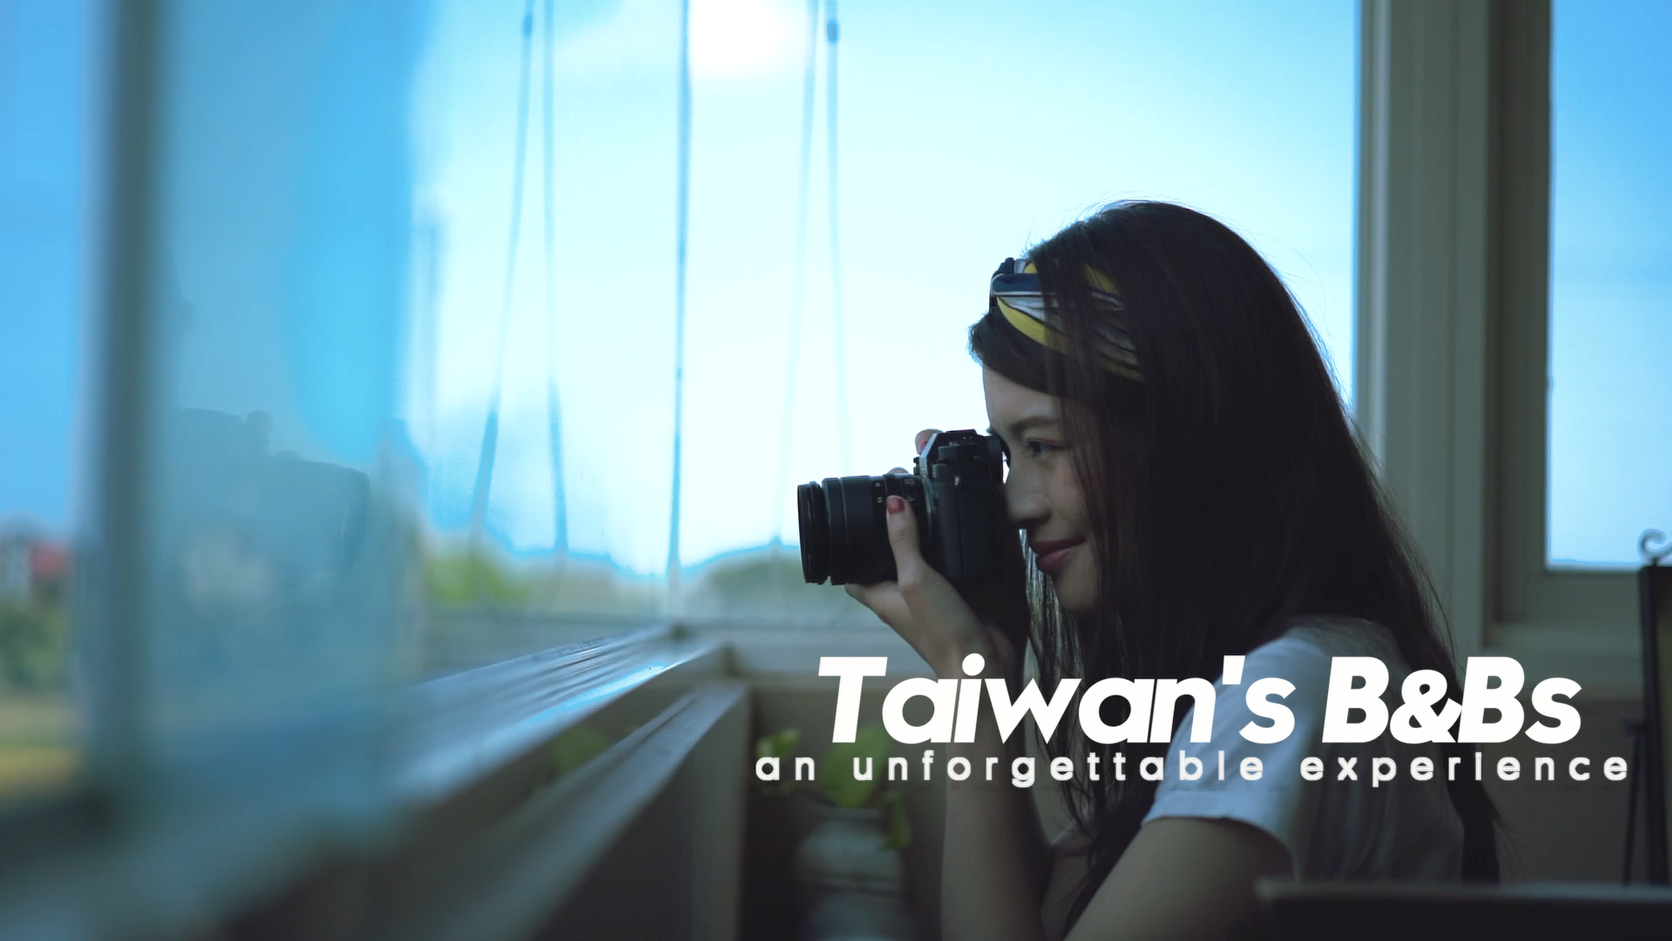  Taiwan Host Promotional Video_Taiwan's B&Bs_2 mins_English